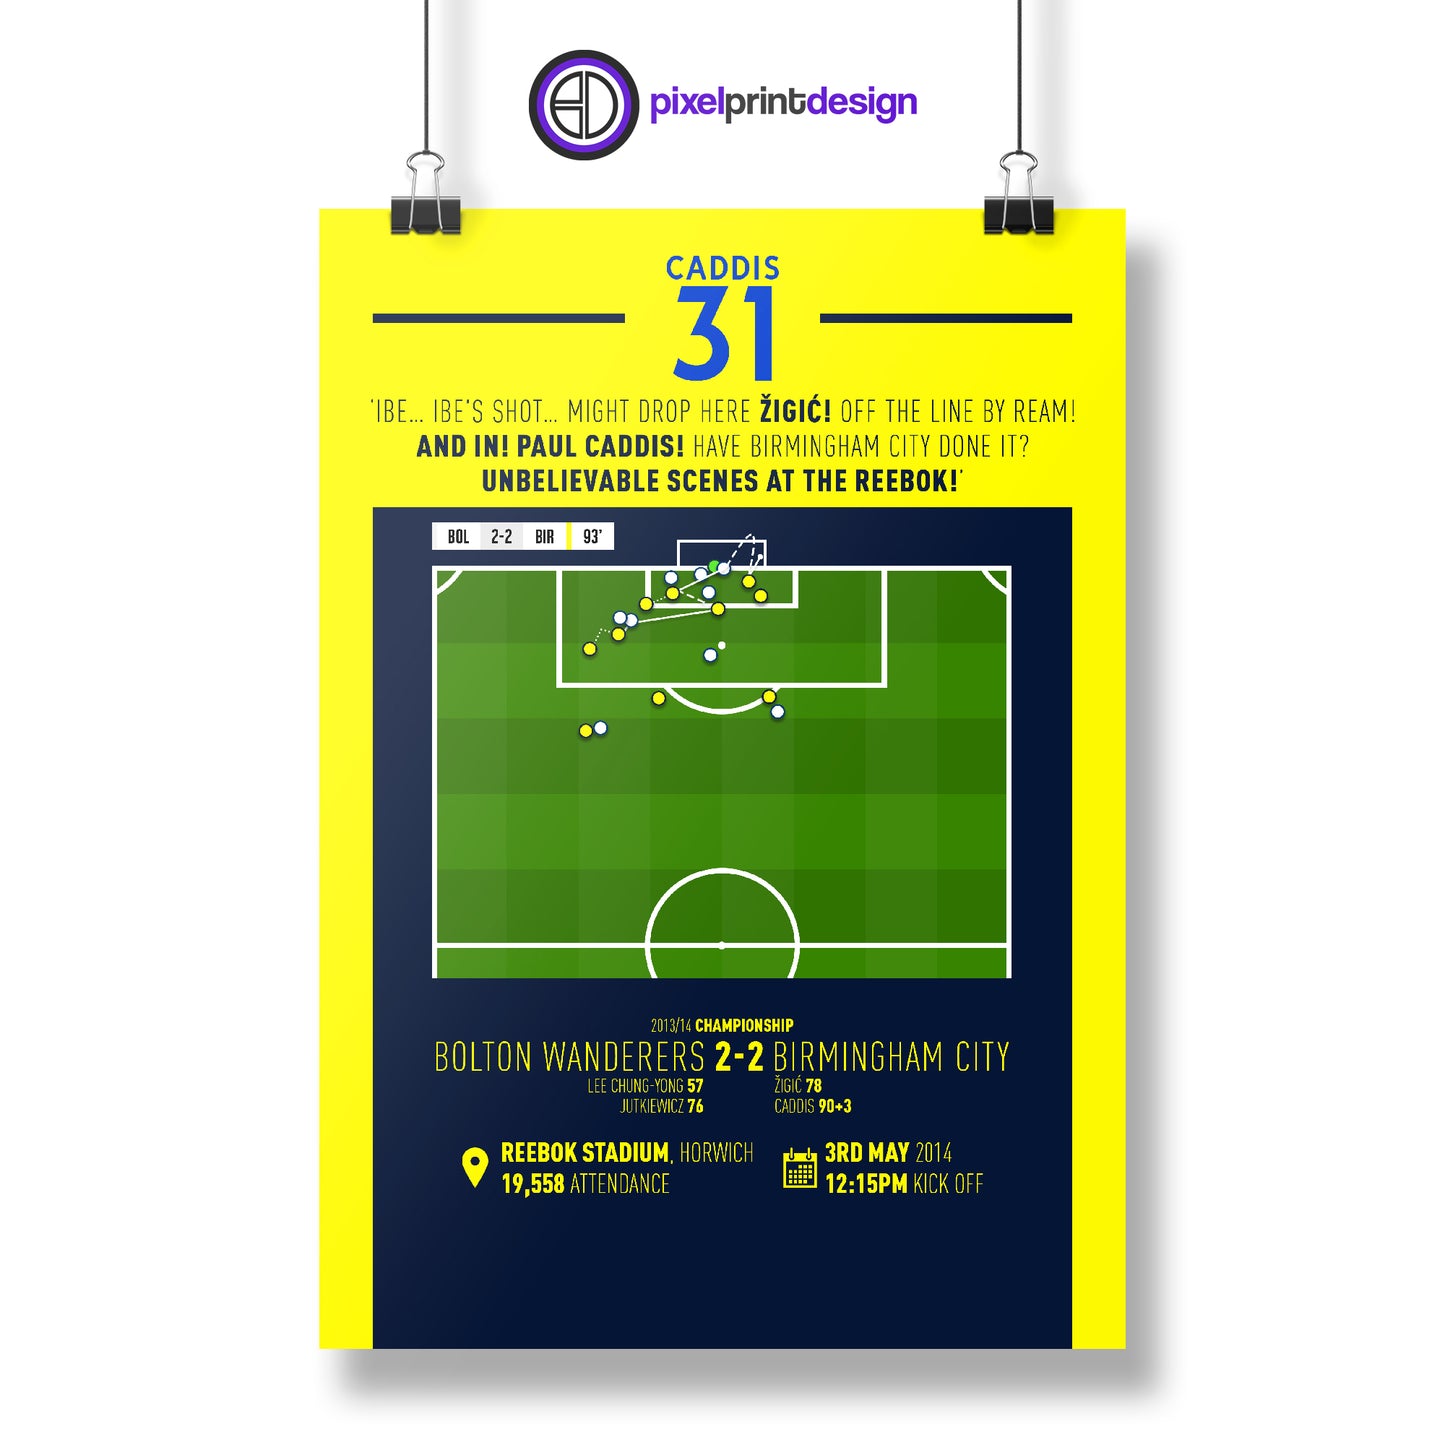 Paul Caddis | Dramatic Late Equaliser To Avoid Relegation (BOL 2-2 BIR) Goal Print | Poster